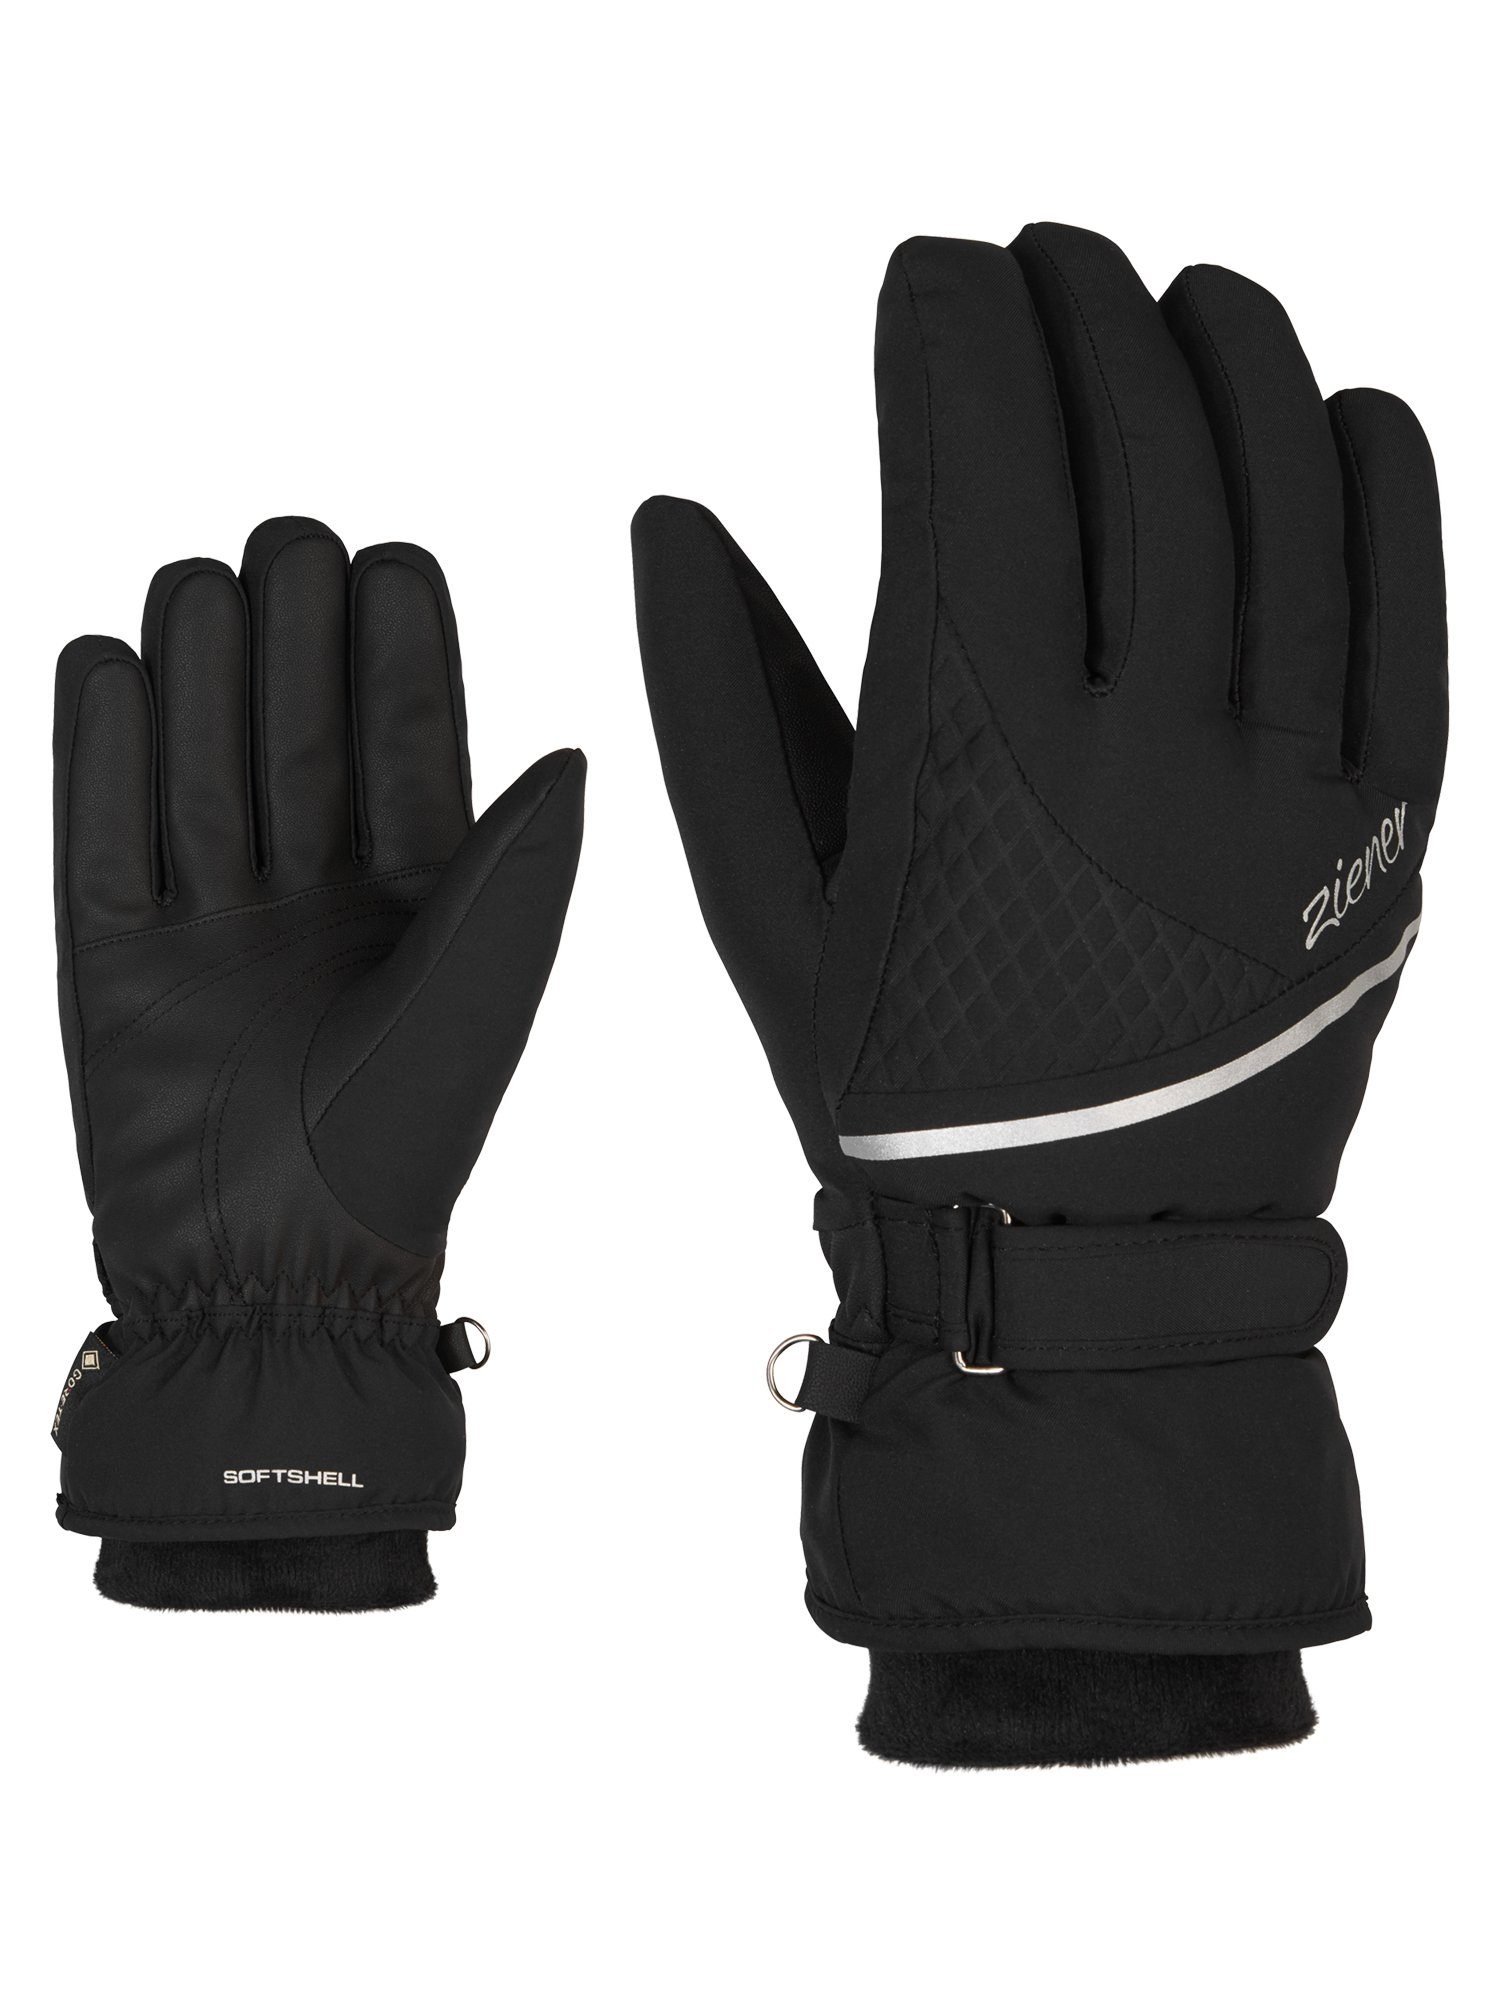 Ziener Skihandschuhe KIANA GTX +Gore plus warm schwarz | Handschuhe